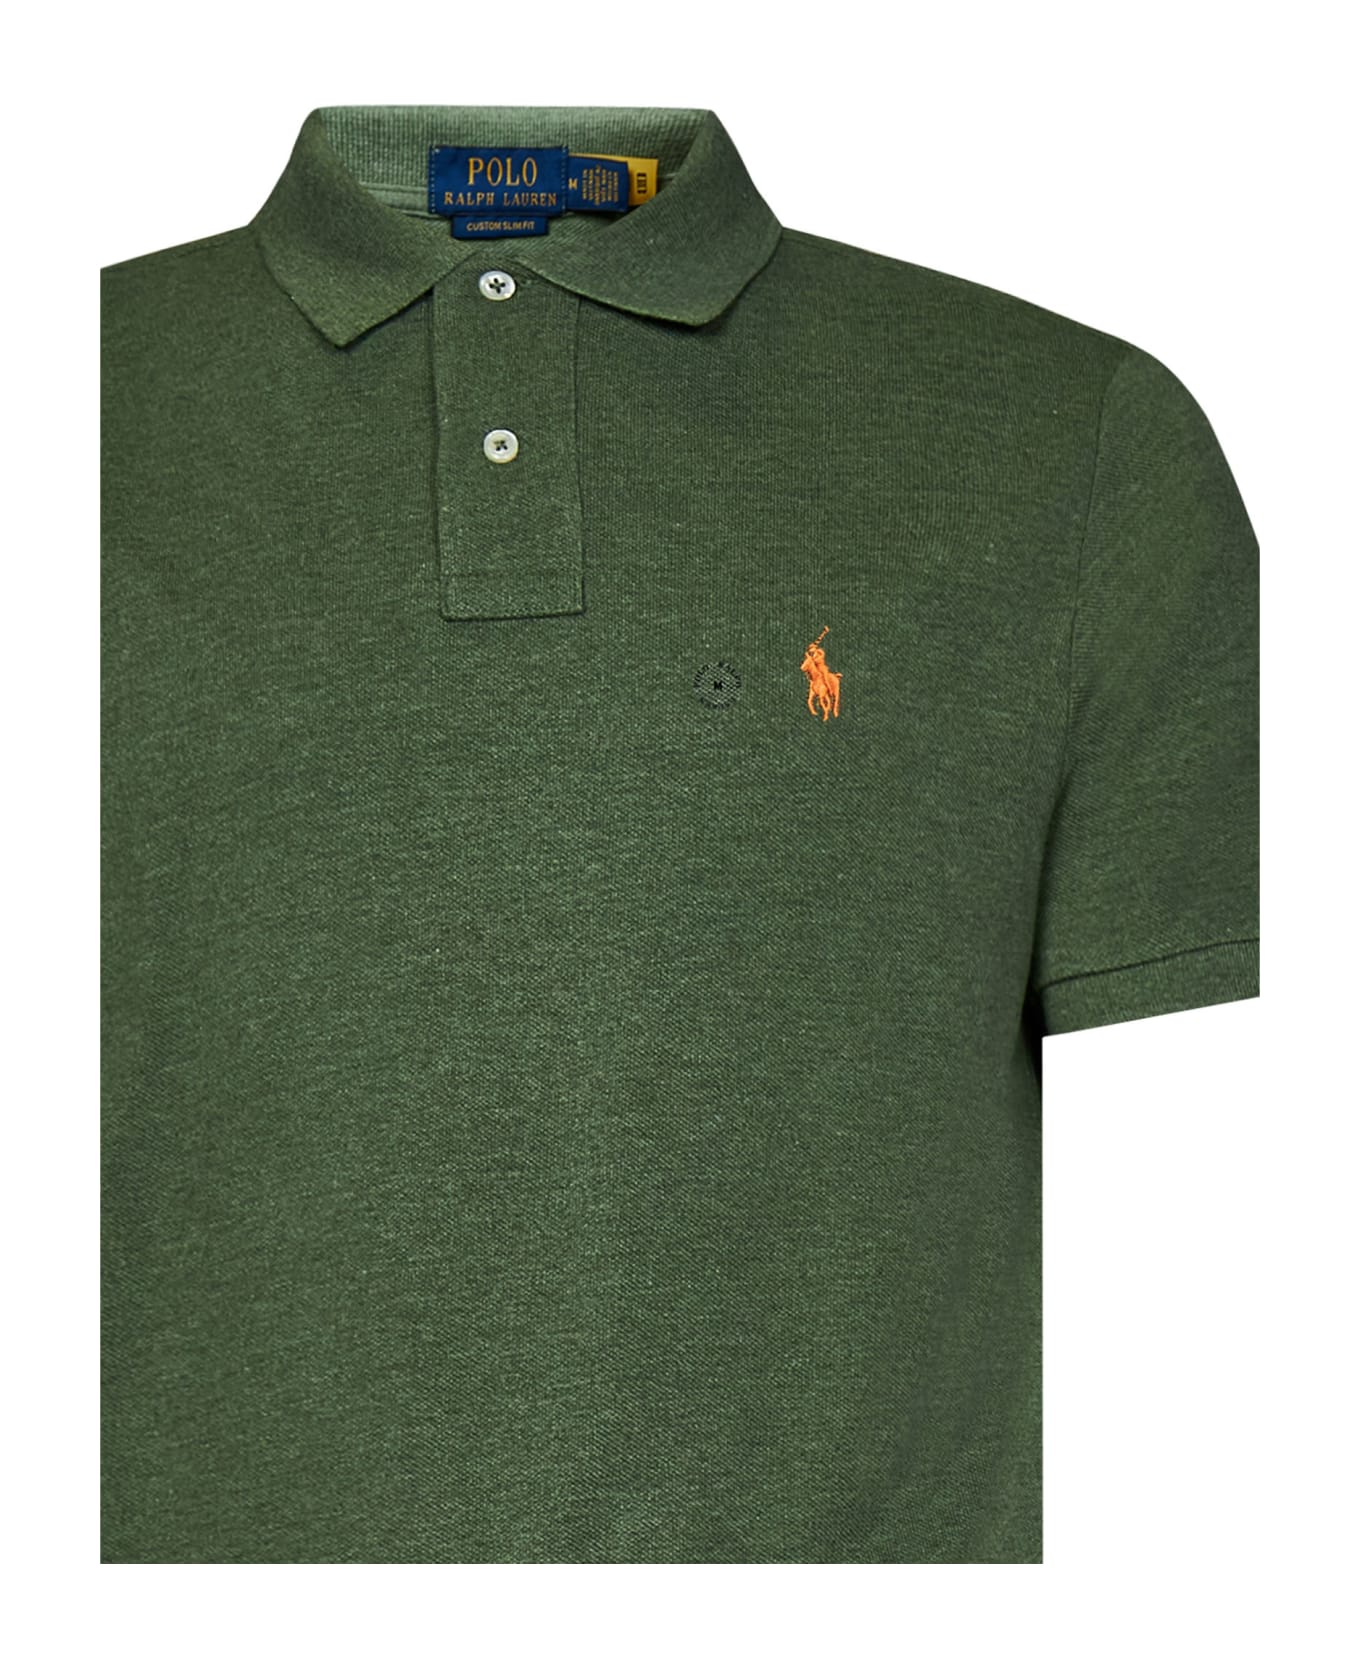 Polo Ralph Lauren Polo Shirt - green